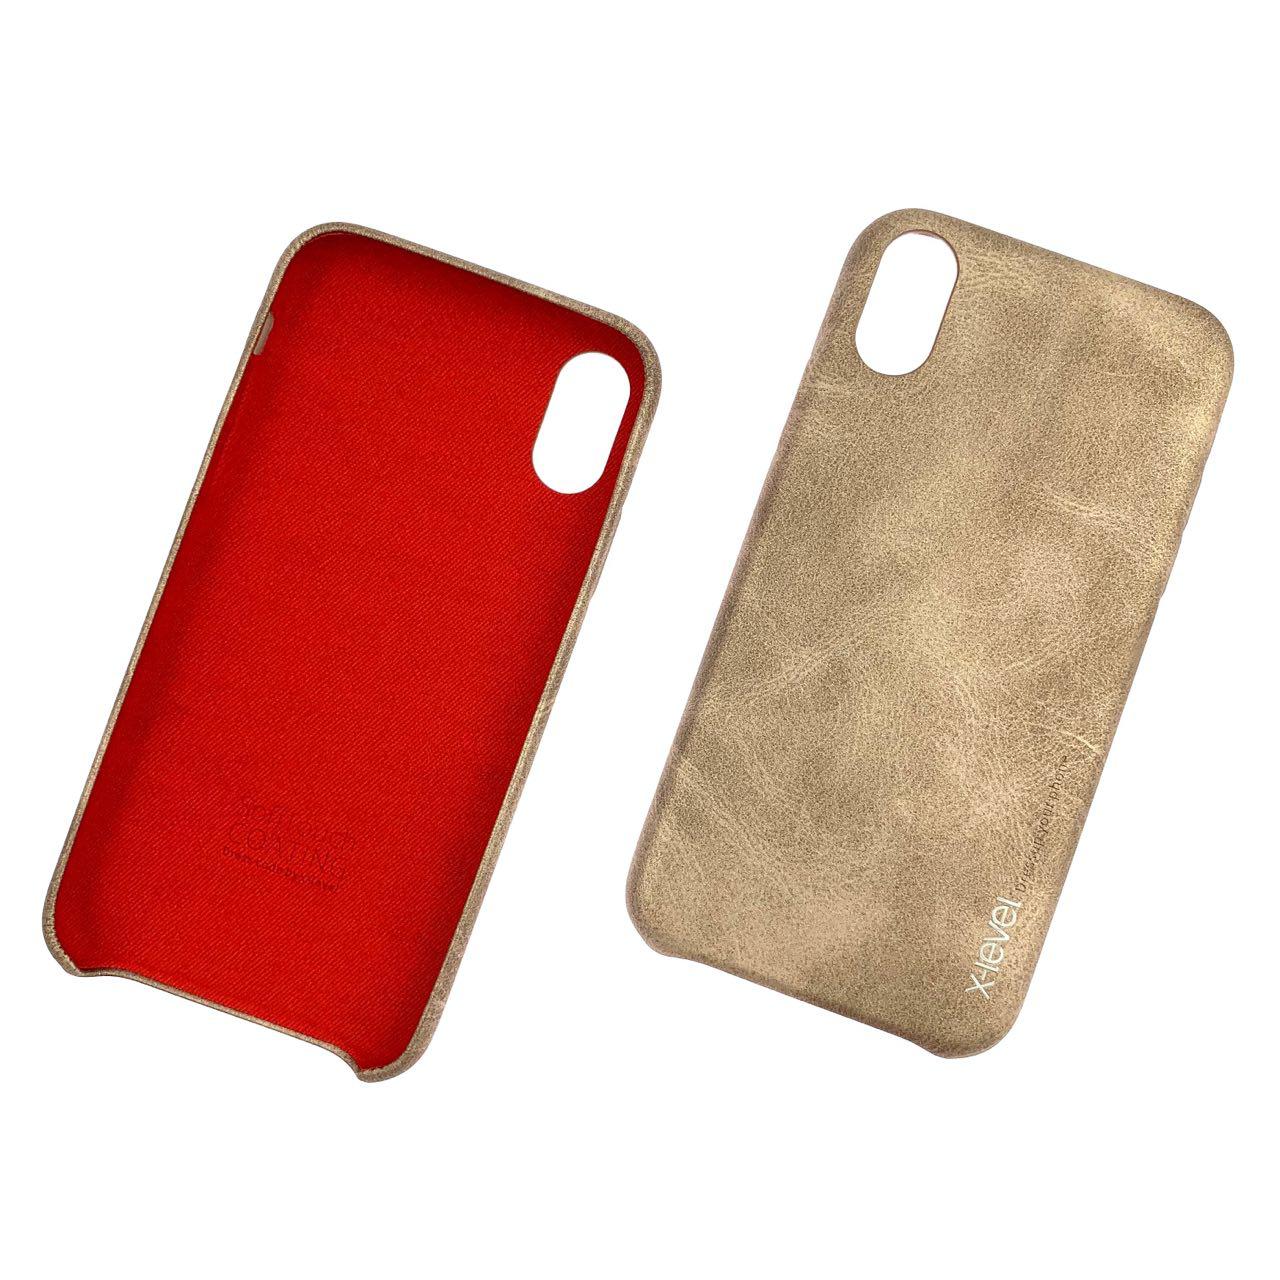 Чехол накладка для APPLE iPhone XR, силикон, имитация кожи, цвет золотистый.